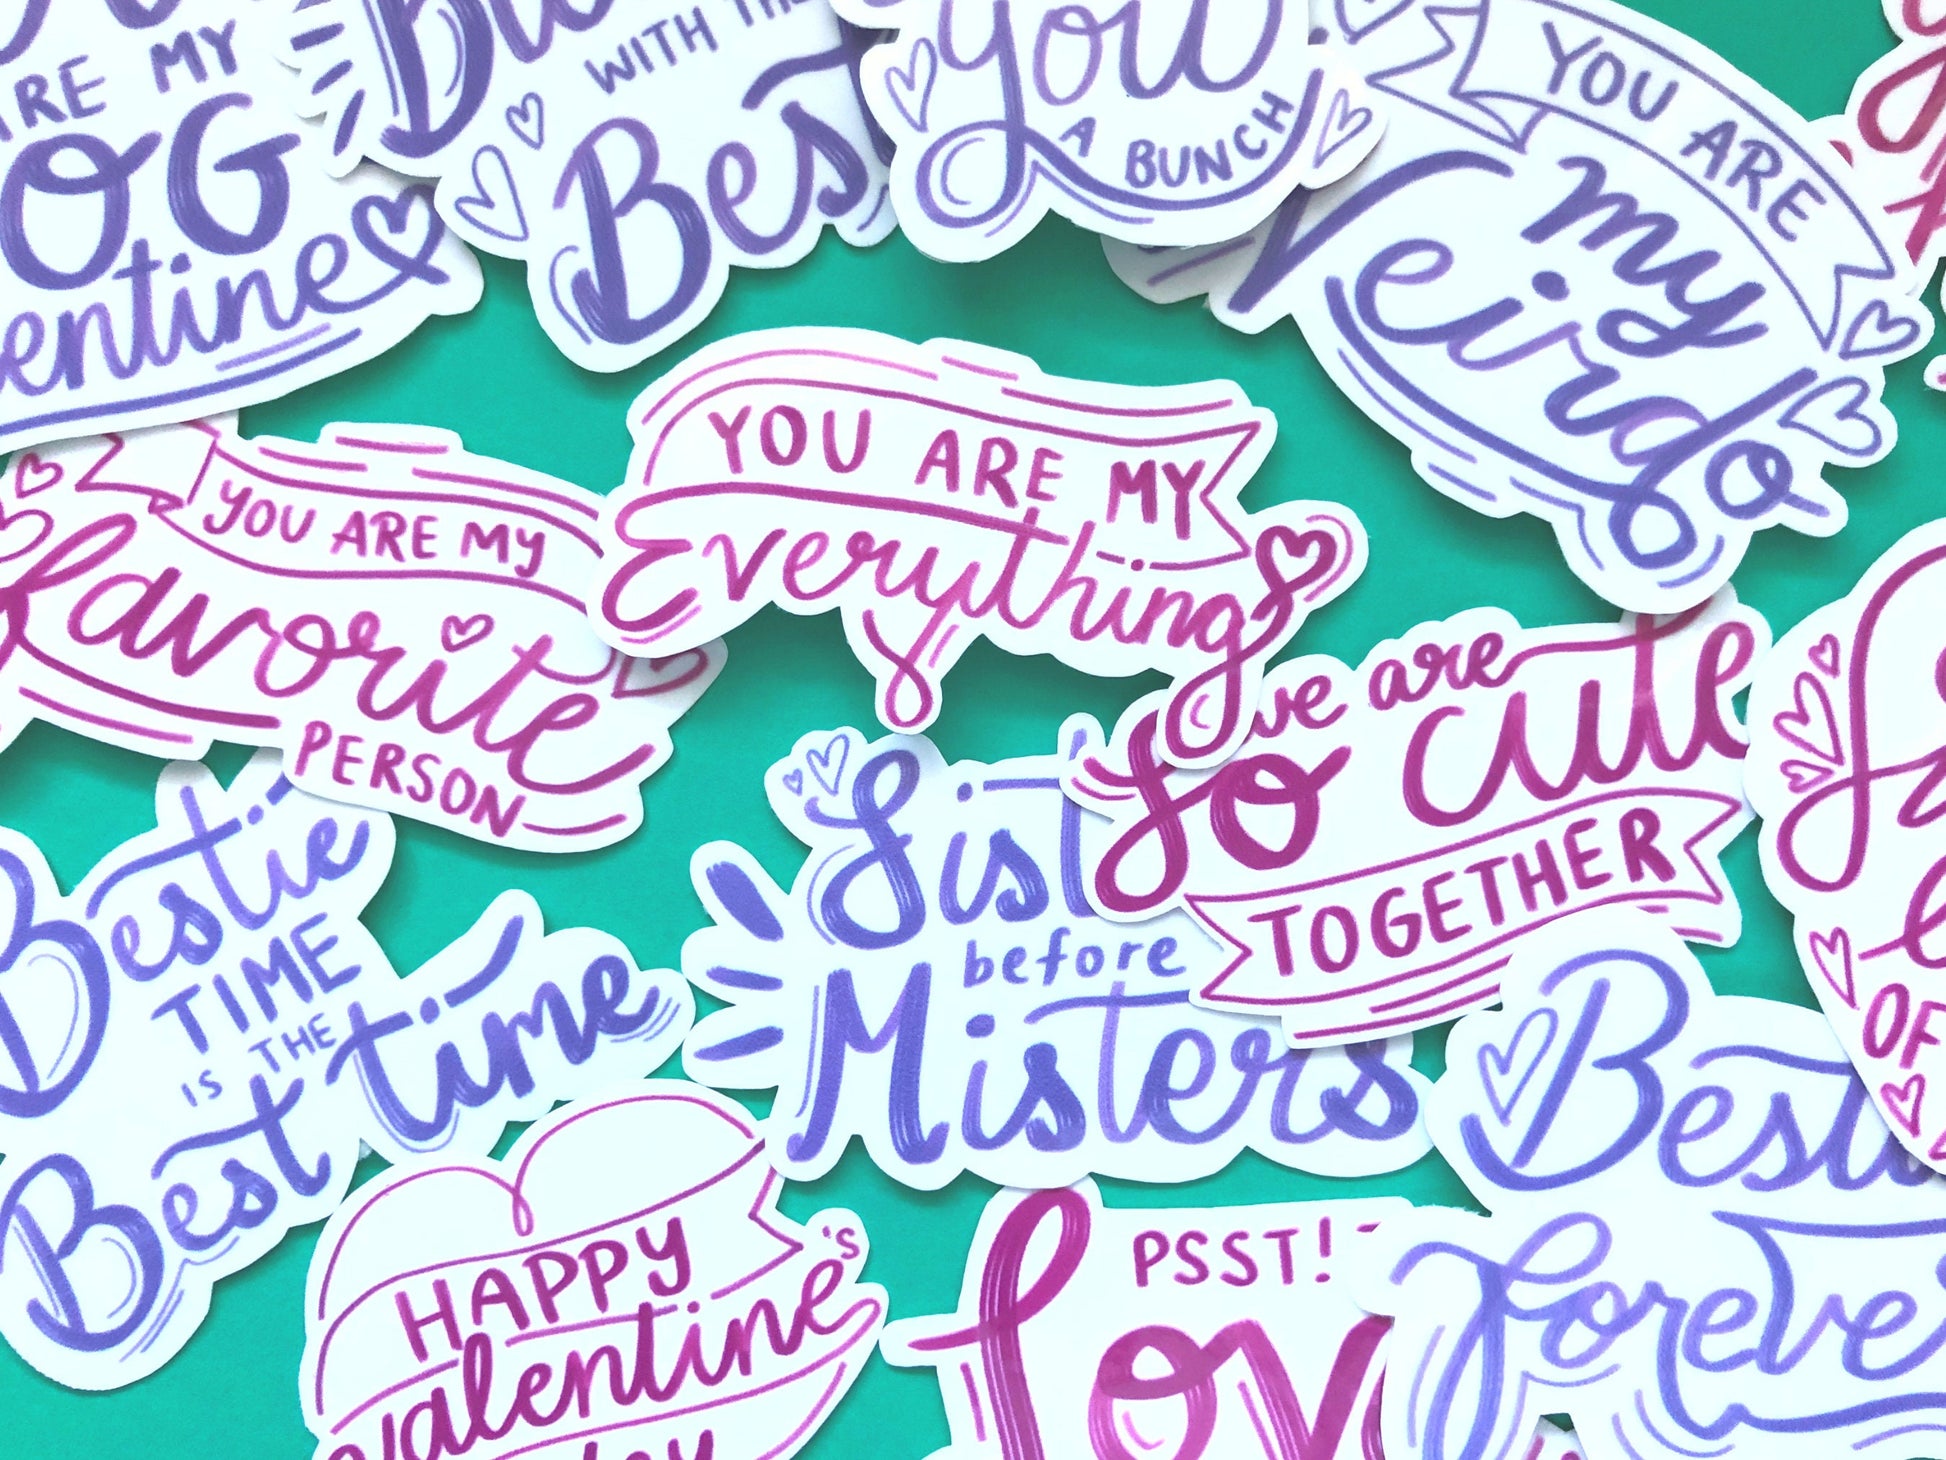 You Are My Weirdo Sticker | Love Sticker | Small Anniversary Gifts